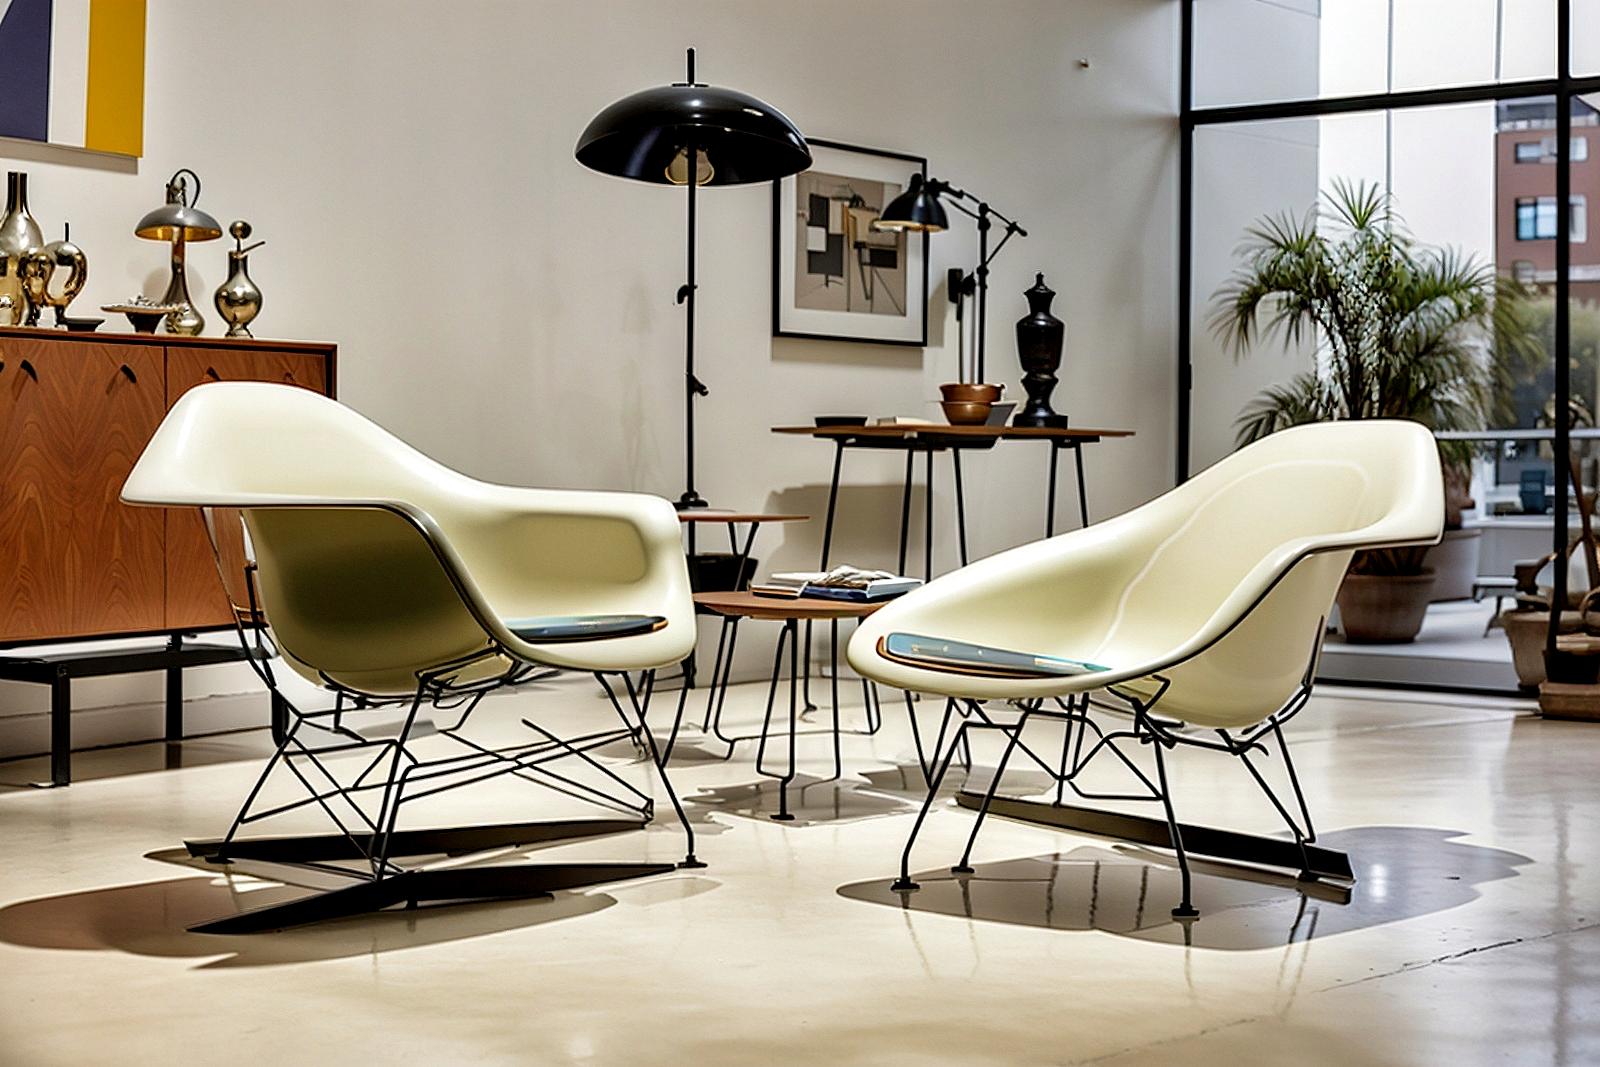 Mid-Century Modern Furniture Features